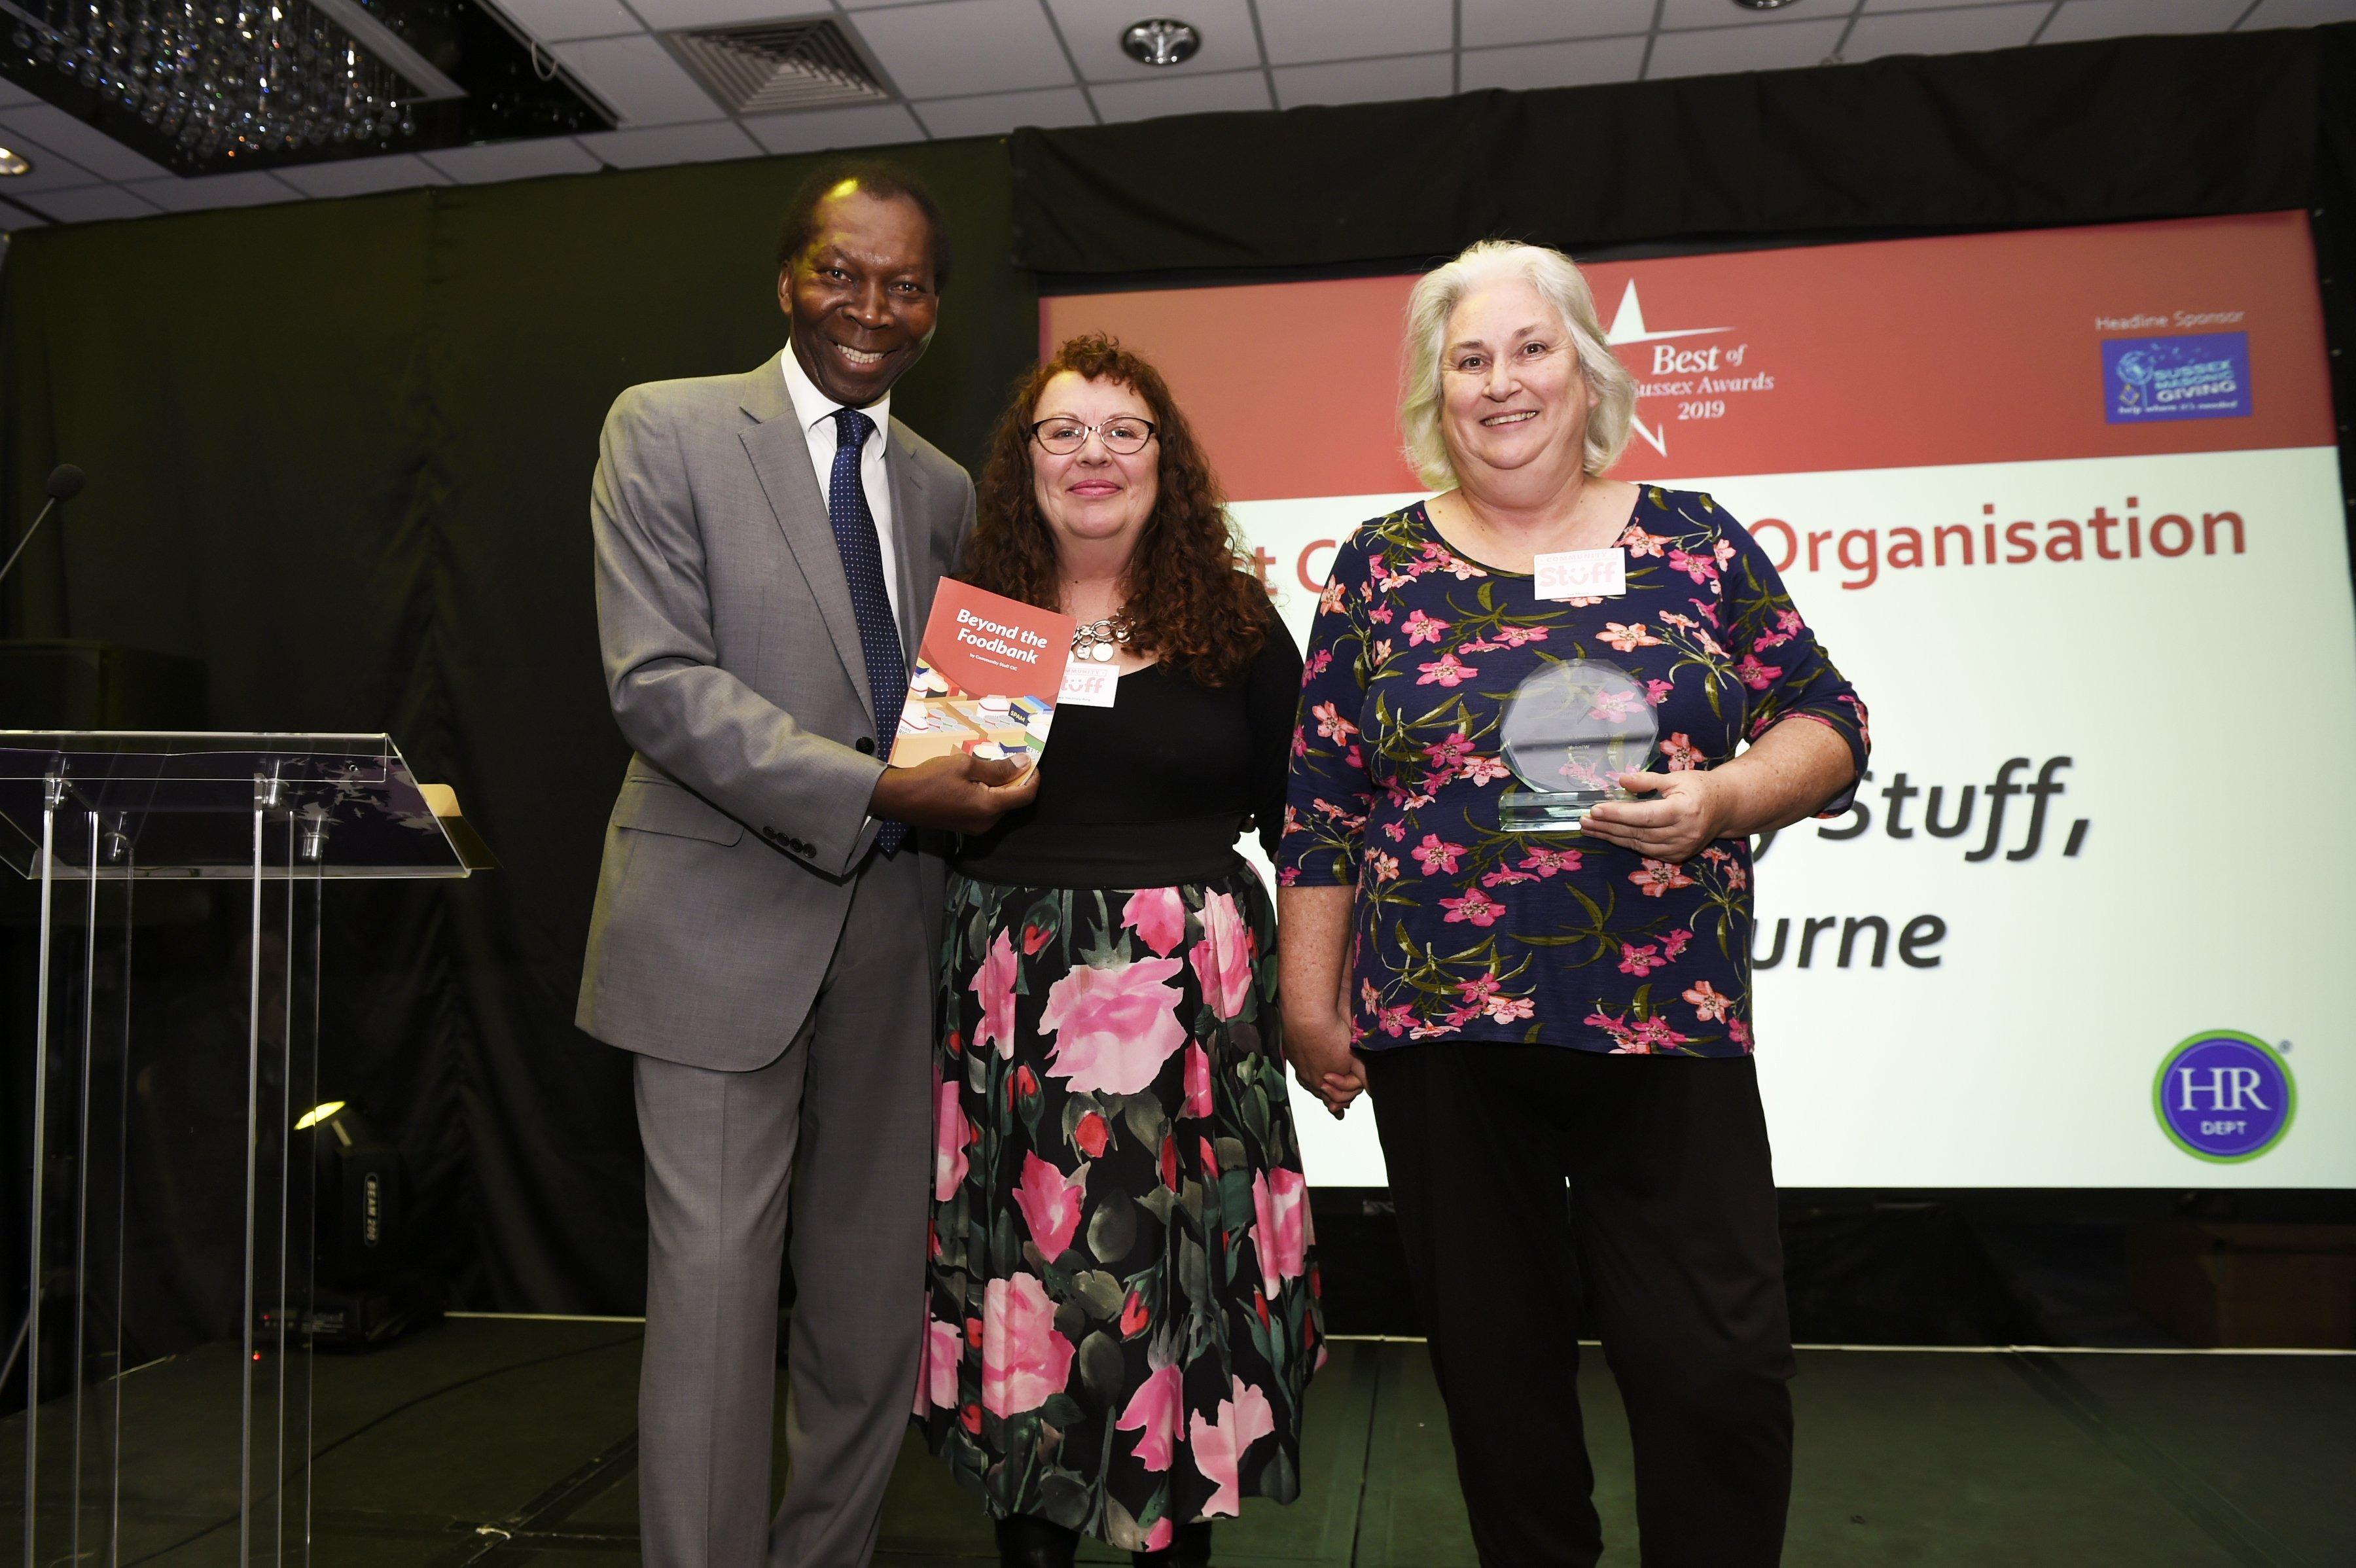 Best Community Organisation winners, Community Stuff with Ambrose Harcourt.



Picture: Liz Pearce. 

LP192047